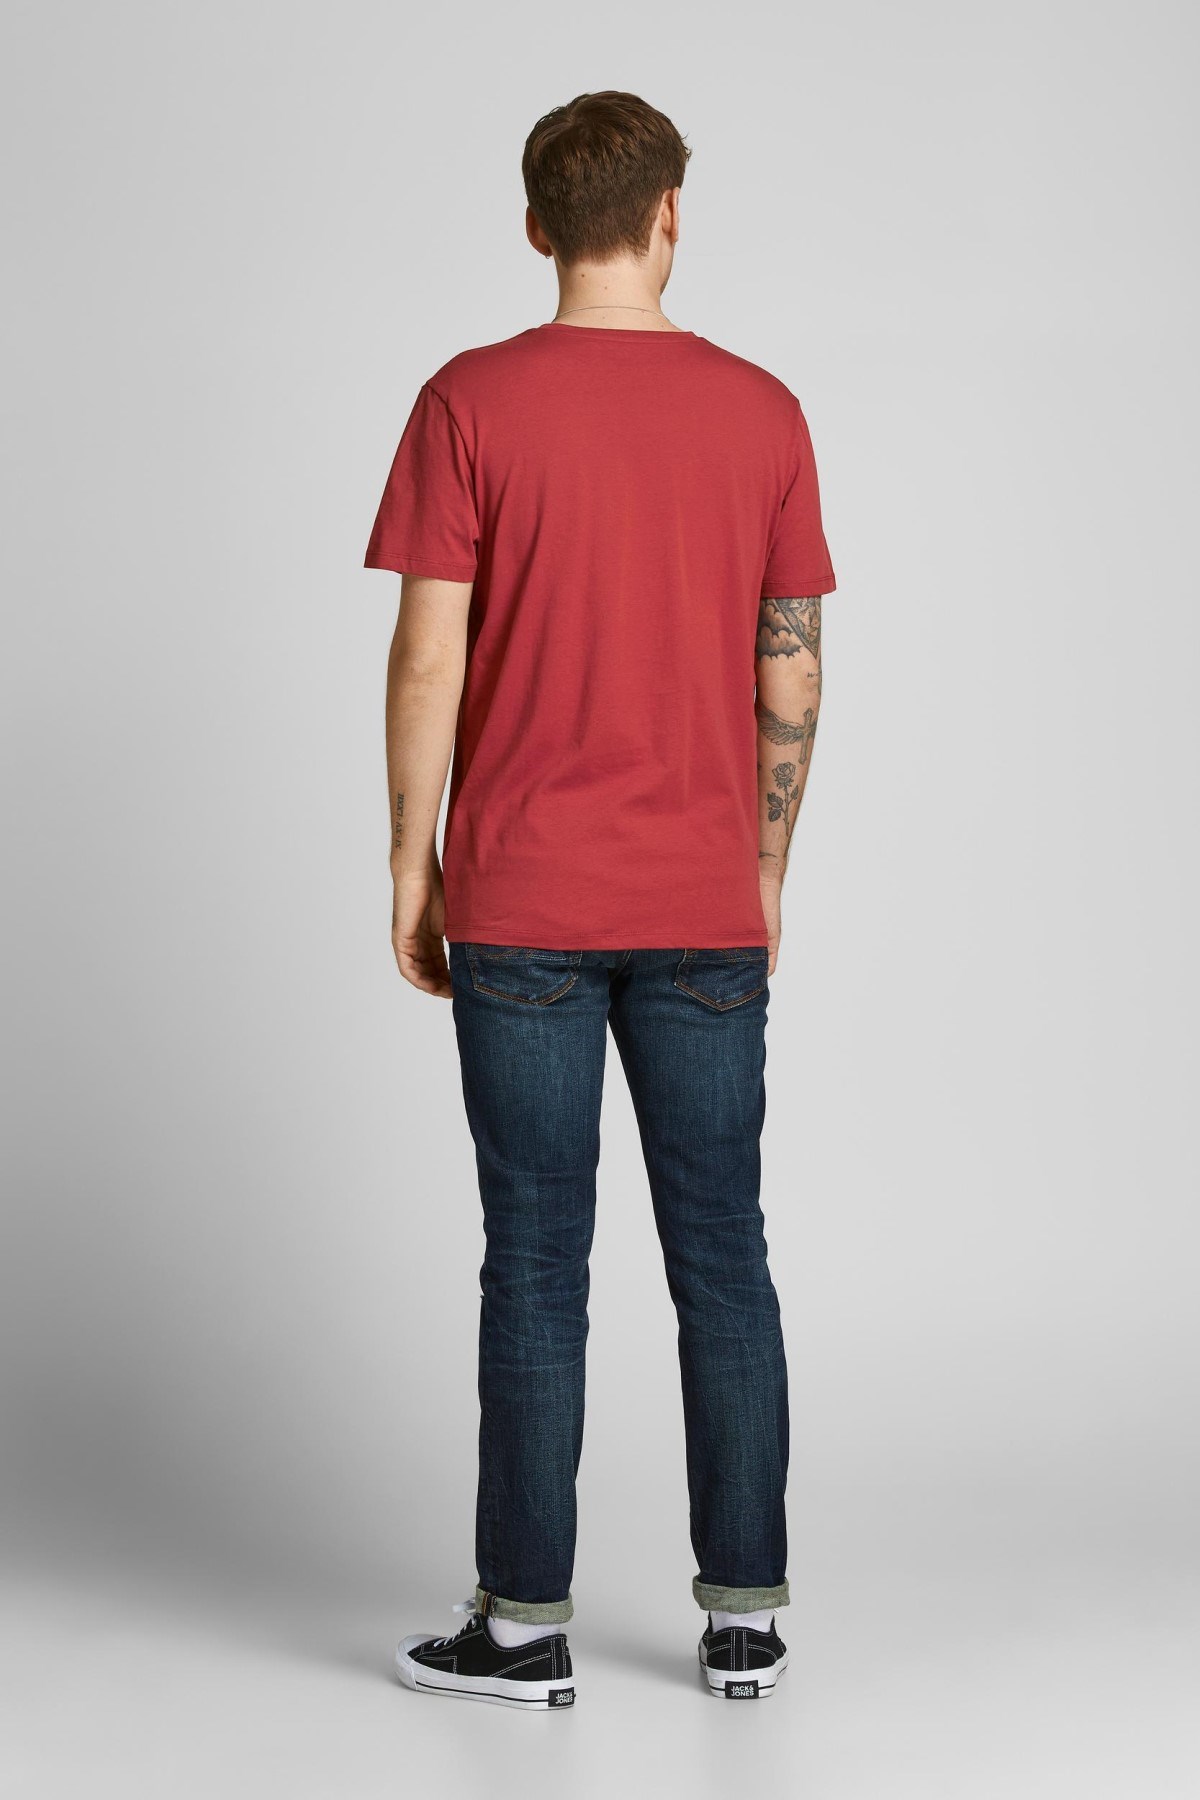 Jack Jones Erkek T-Shirt 12208452 Brick Red